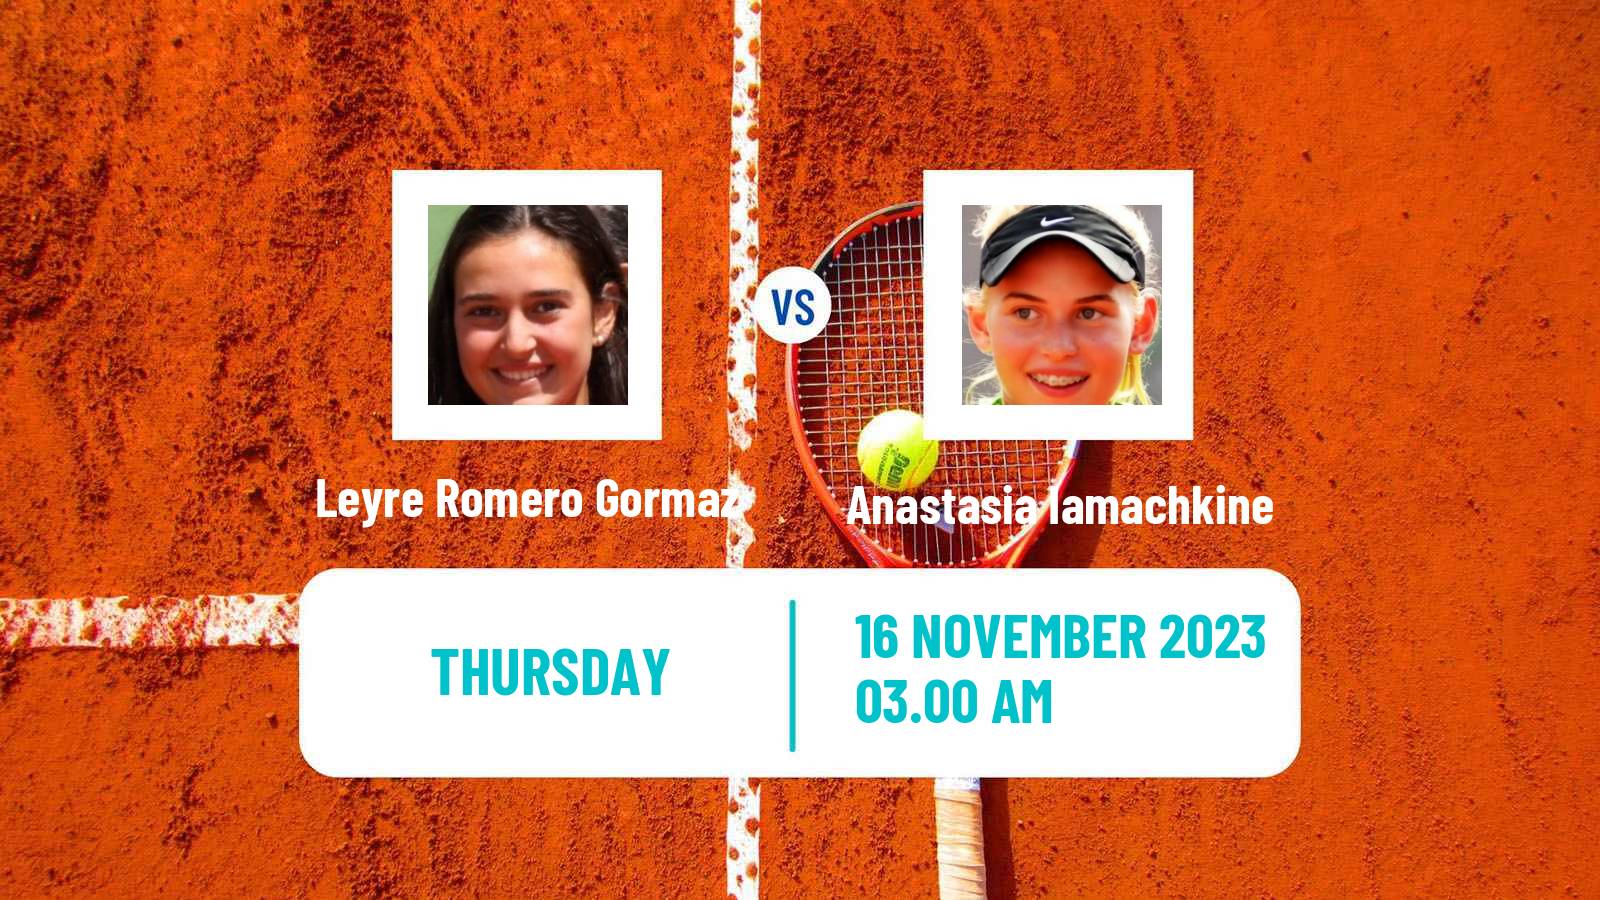 Tennis ITF W25 Heraklion 2 Women Leyre Romero Gormaz - Anastasia Iamachkine